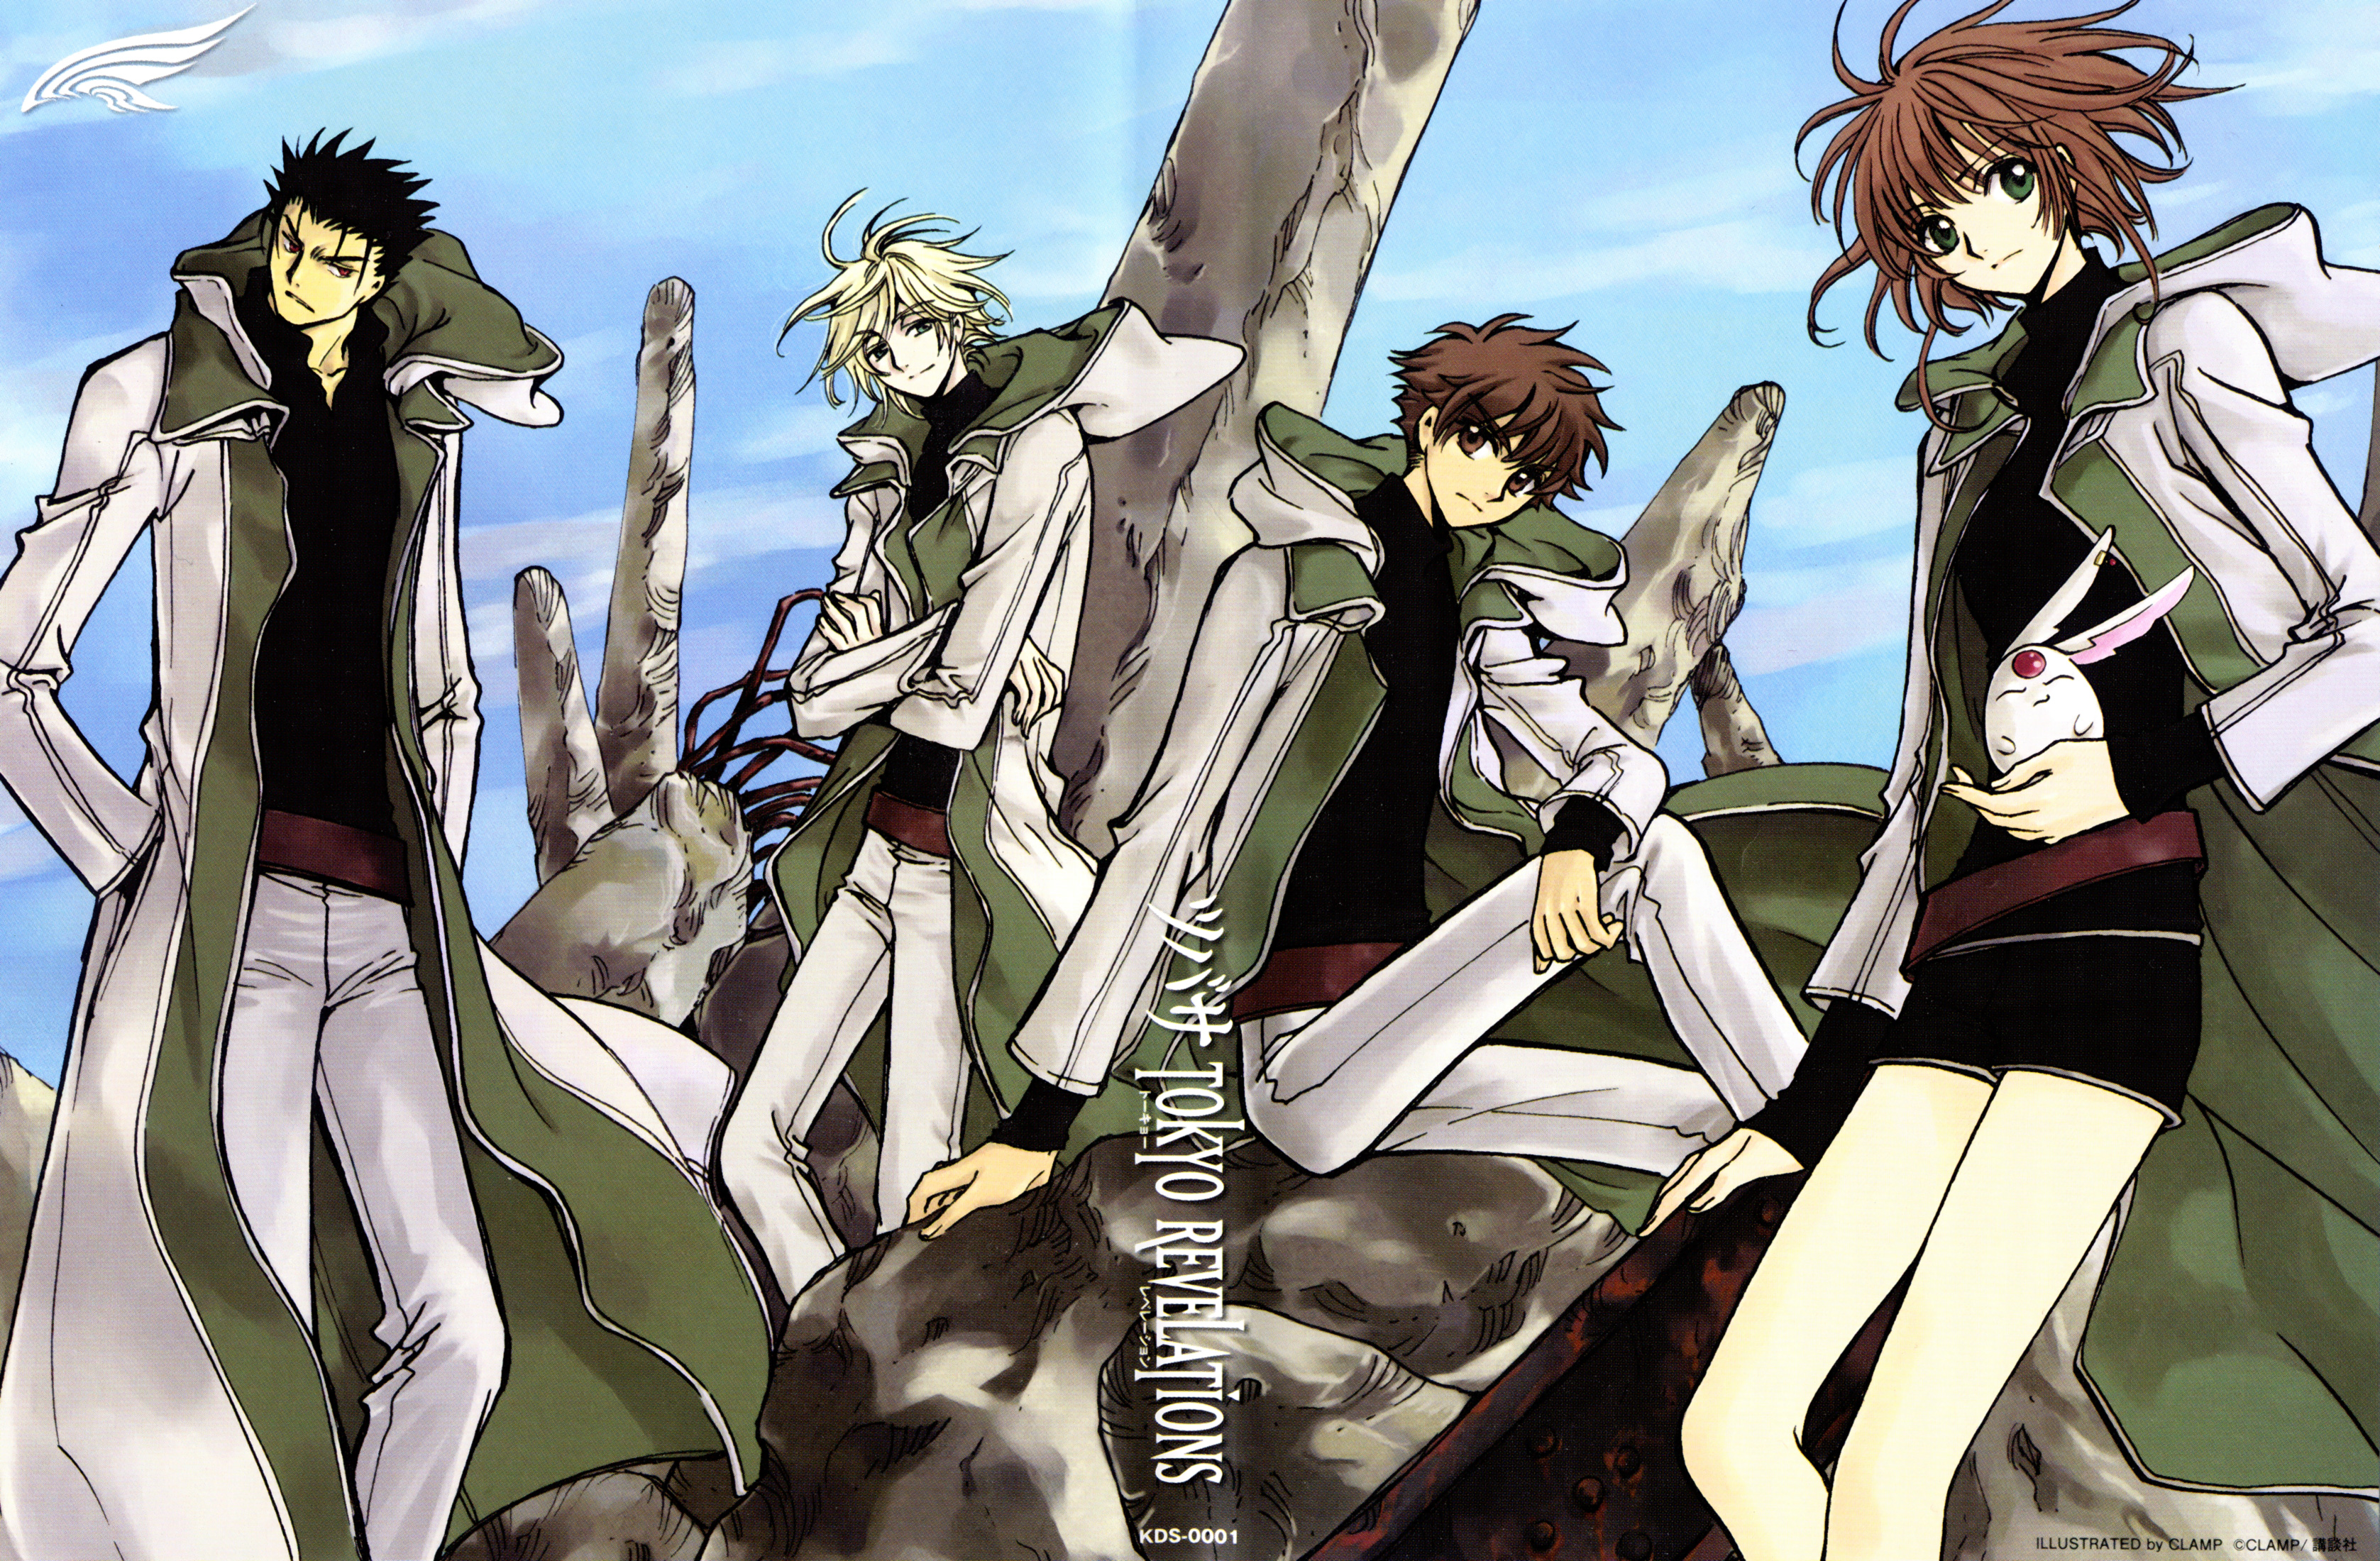 Tsubasa Reservoir Chronicle Full HD Wallpaper And Background Image